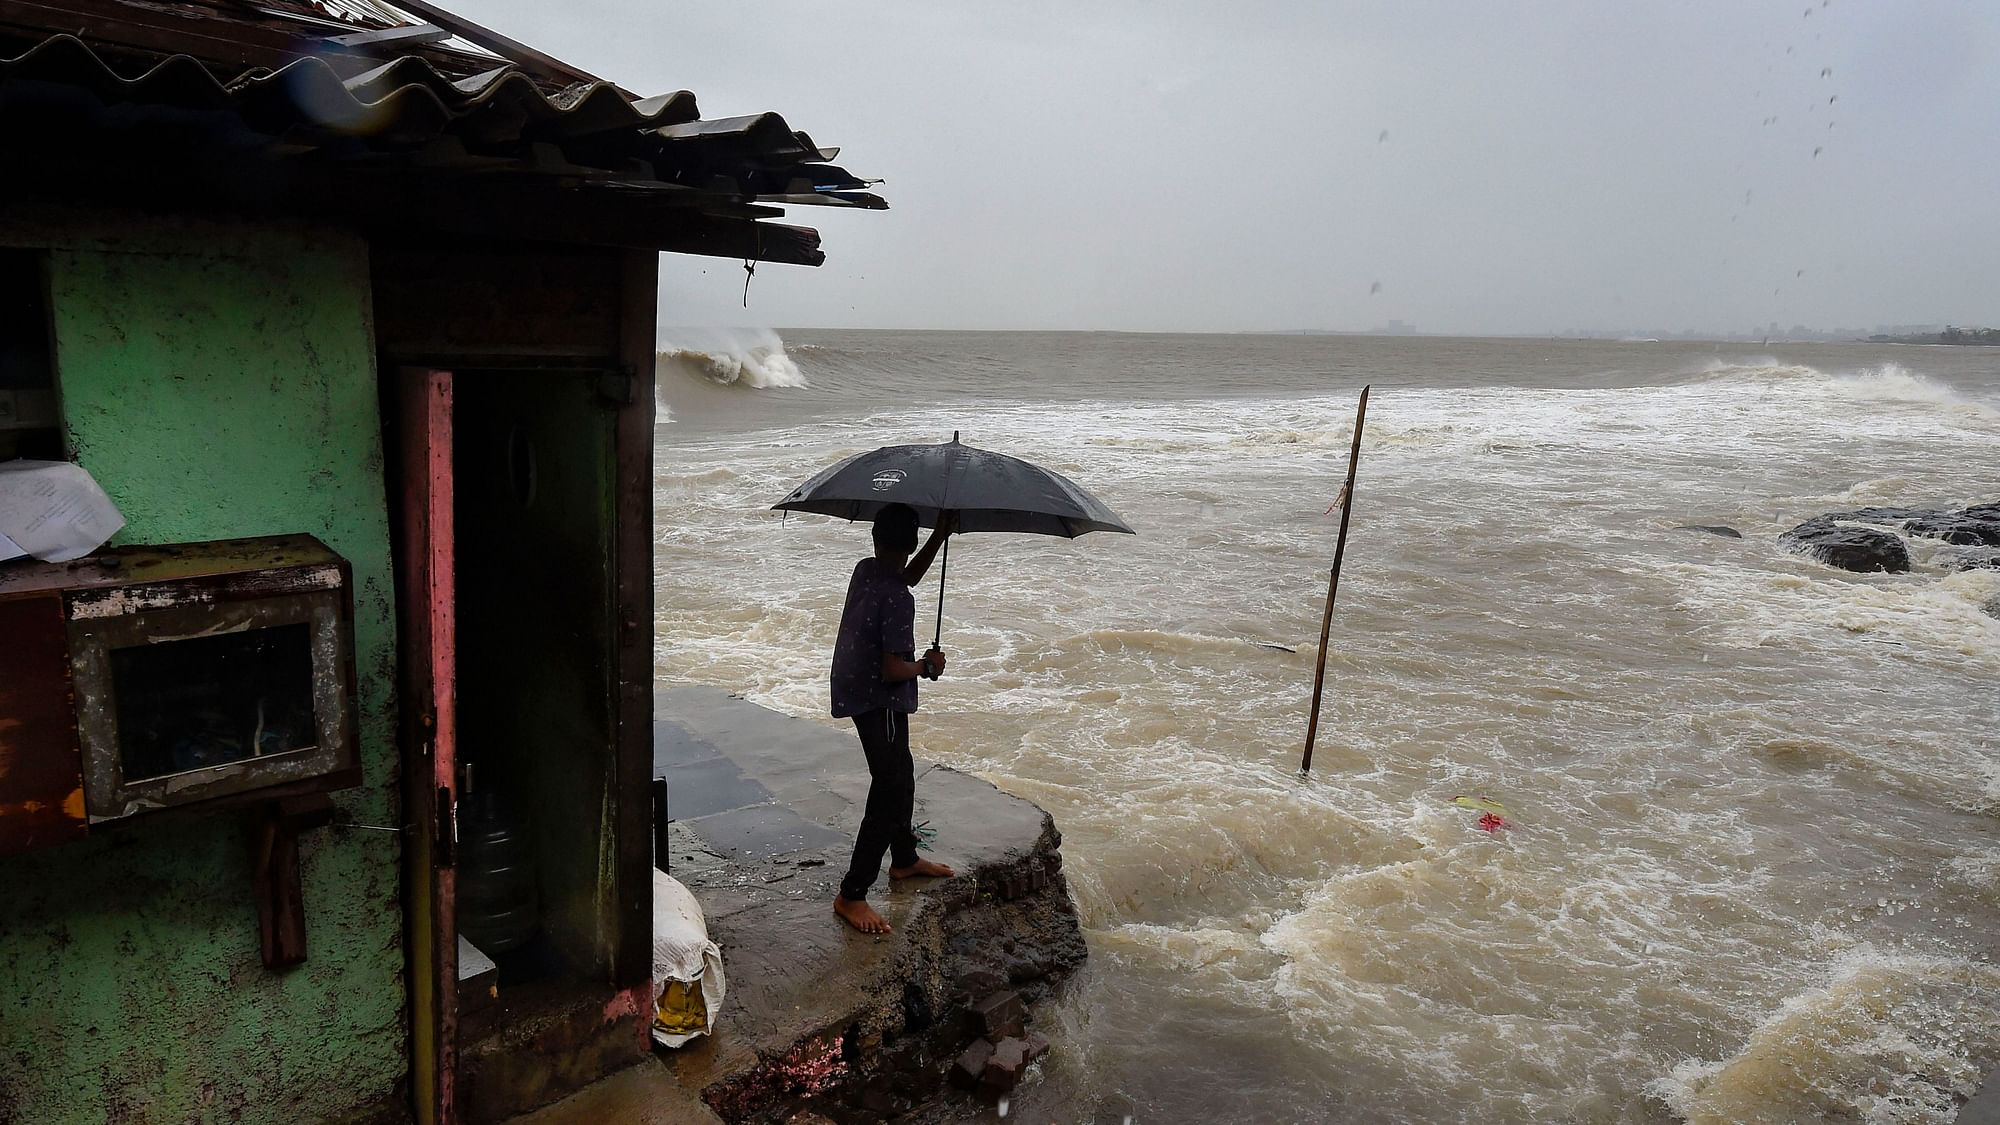 A man stands near a shanty built on the edge of the Arabian Sea at Bandra, Mumbai ahead of Cyclone Nisarga.